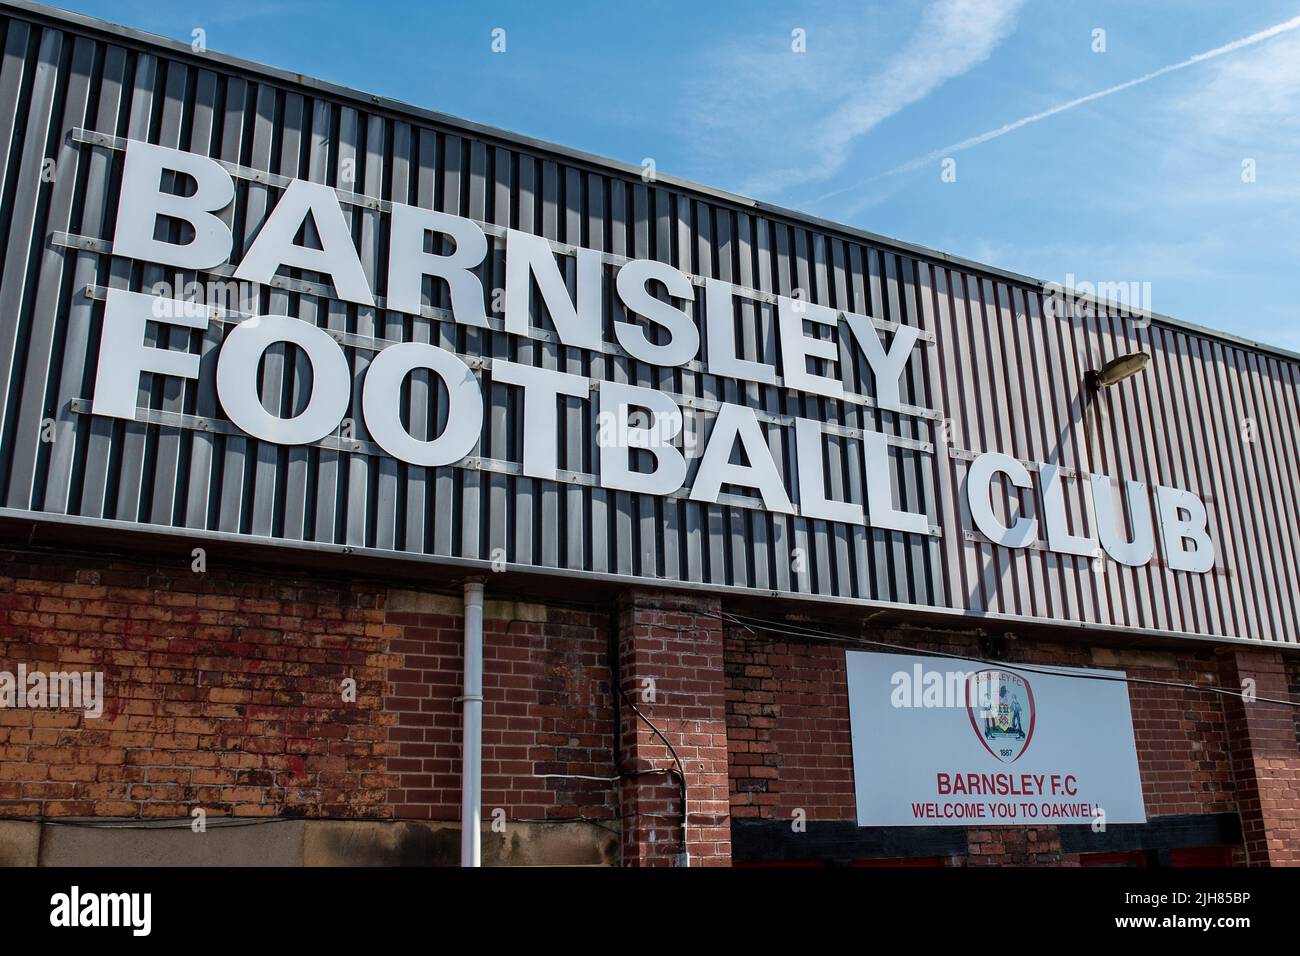 22/23 PRE-SEASON SCHEDULE - News - Barnsley Football Club